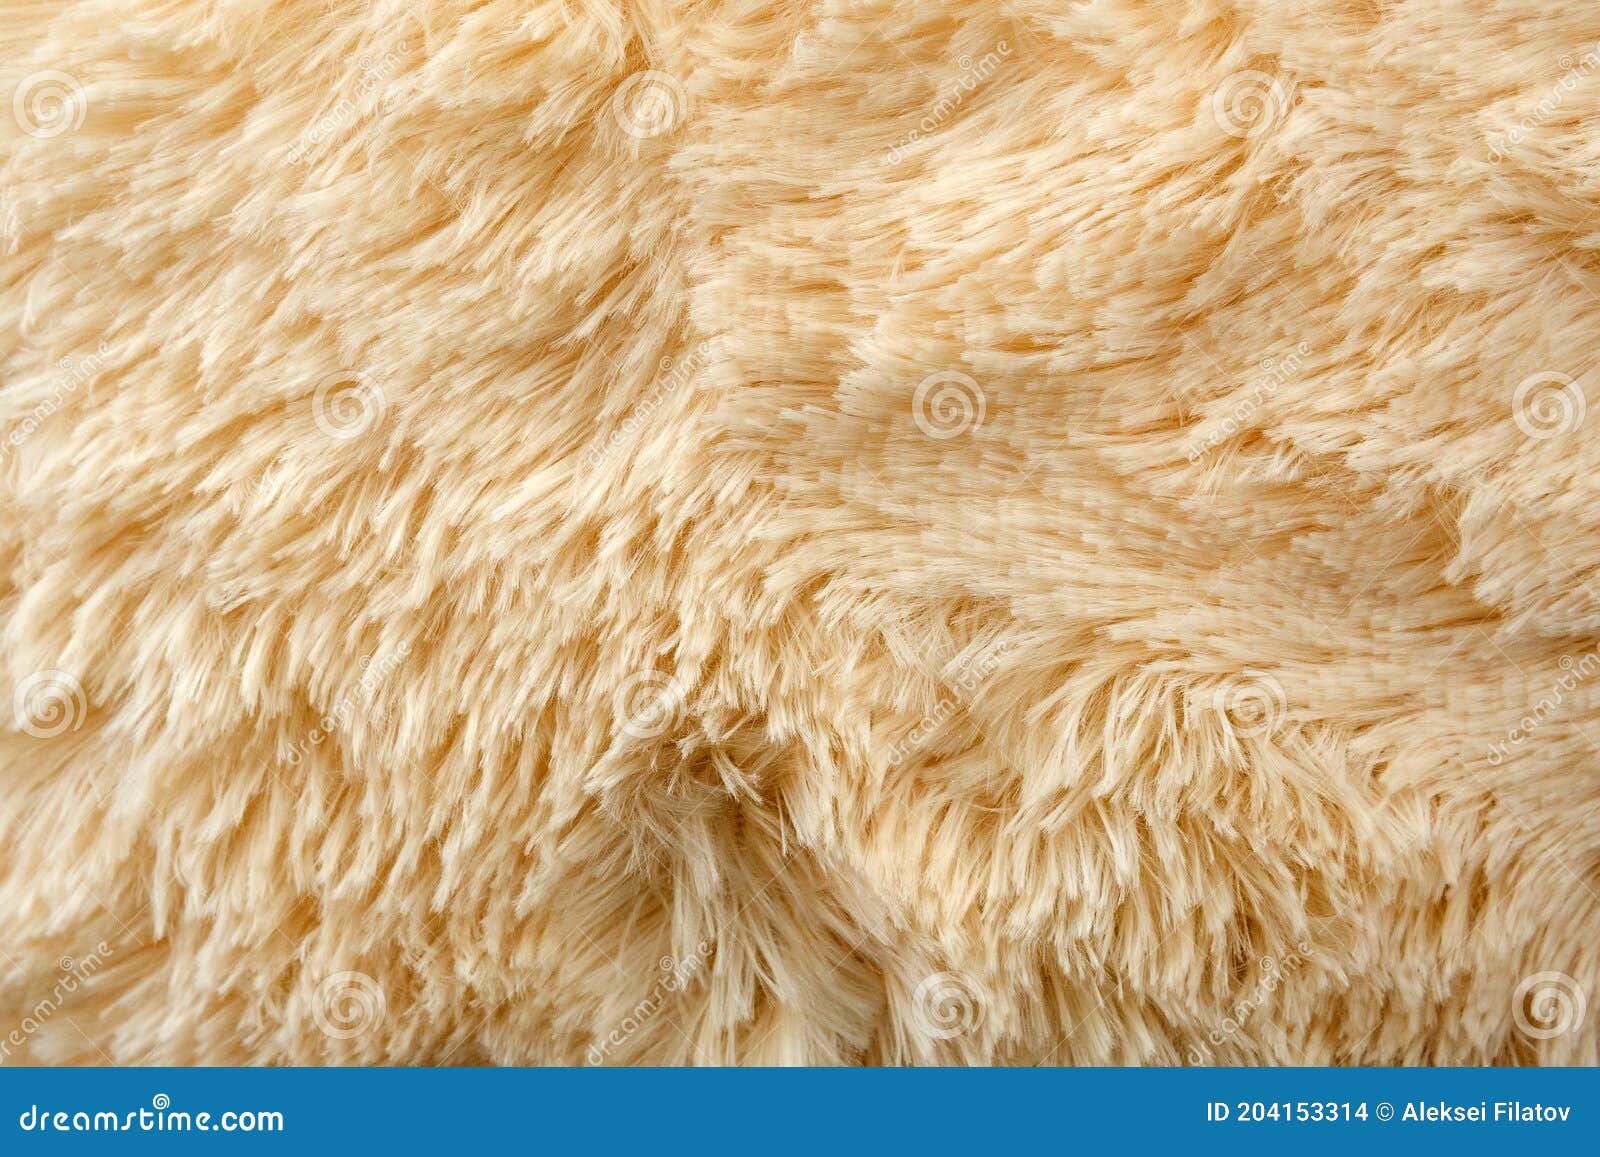 1,558,180 Carpet Wallpaper Images, Stock Photos & Vectors | Shutterstock